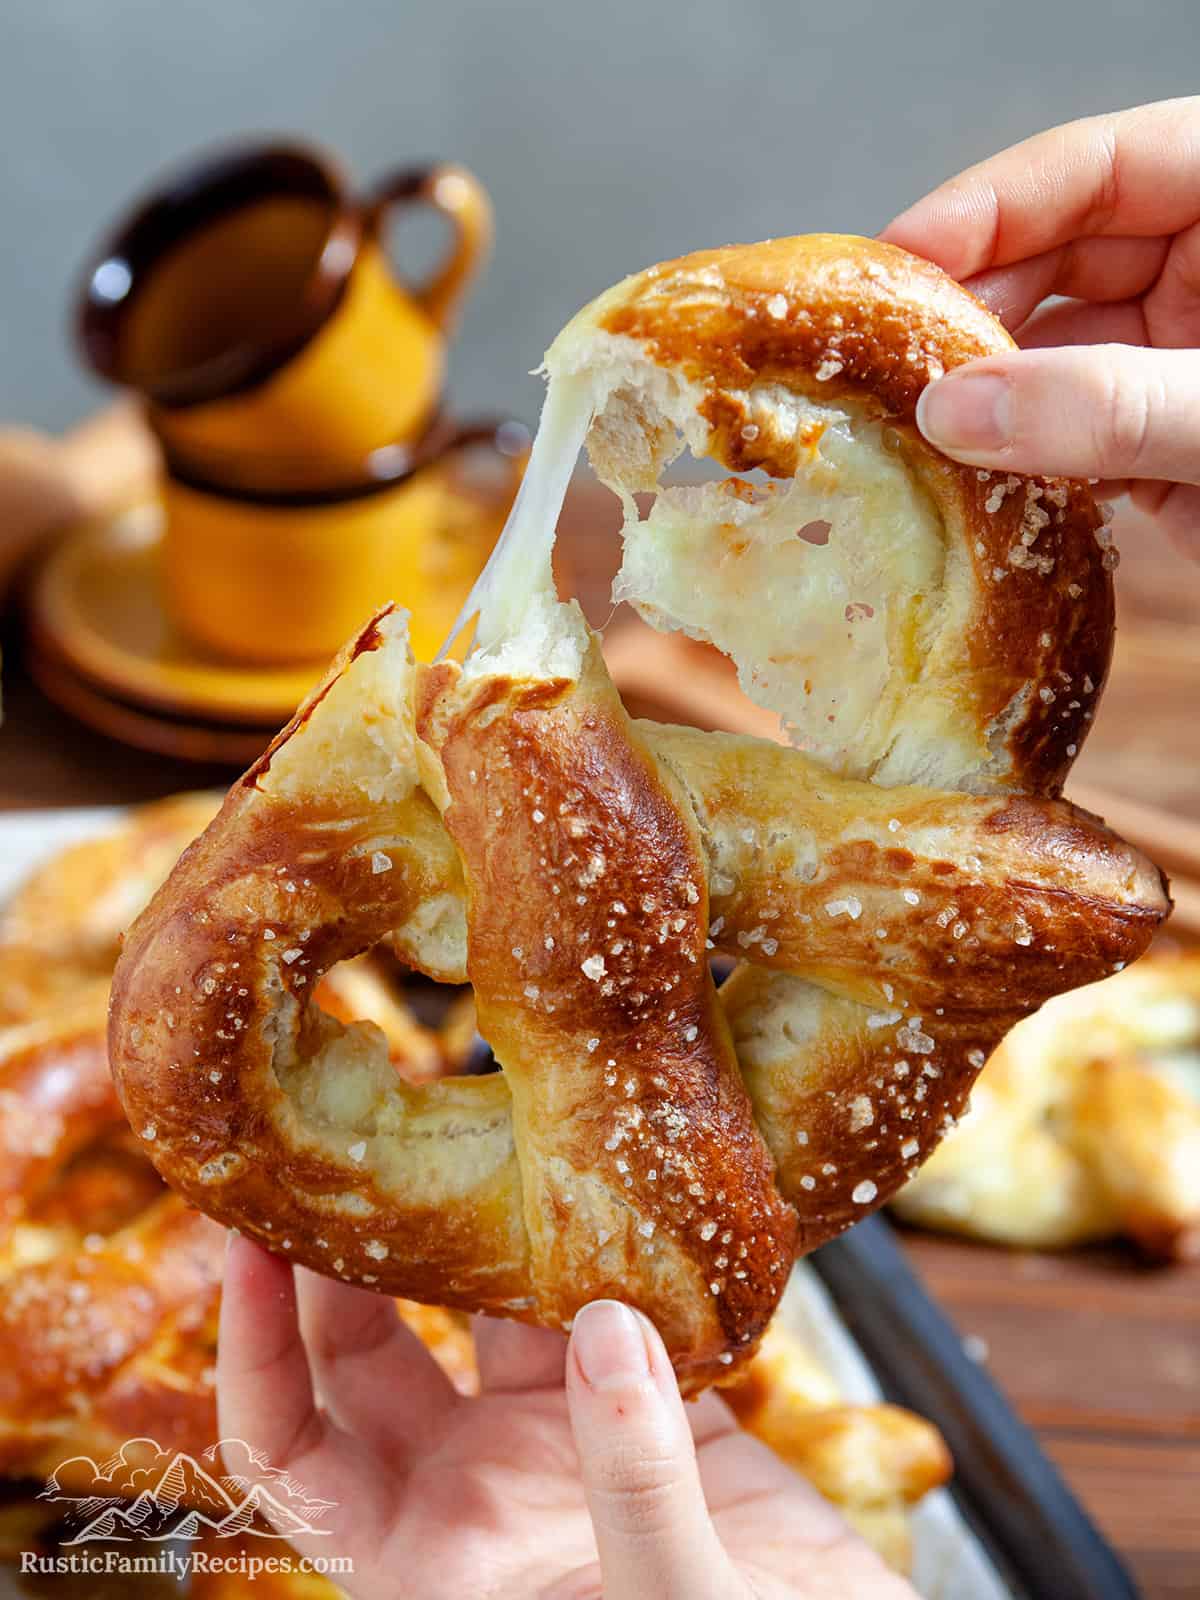 Hands breaking open a pretzel stuffed with cheese